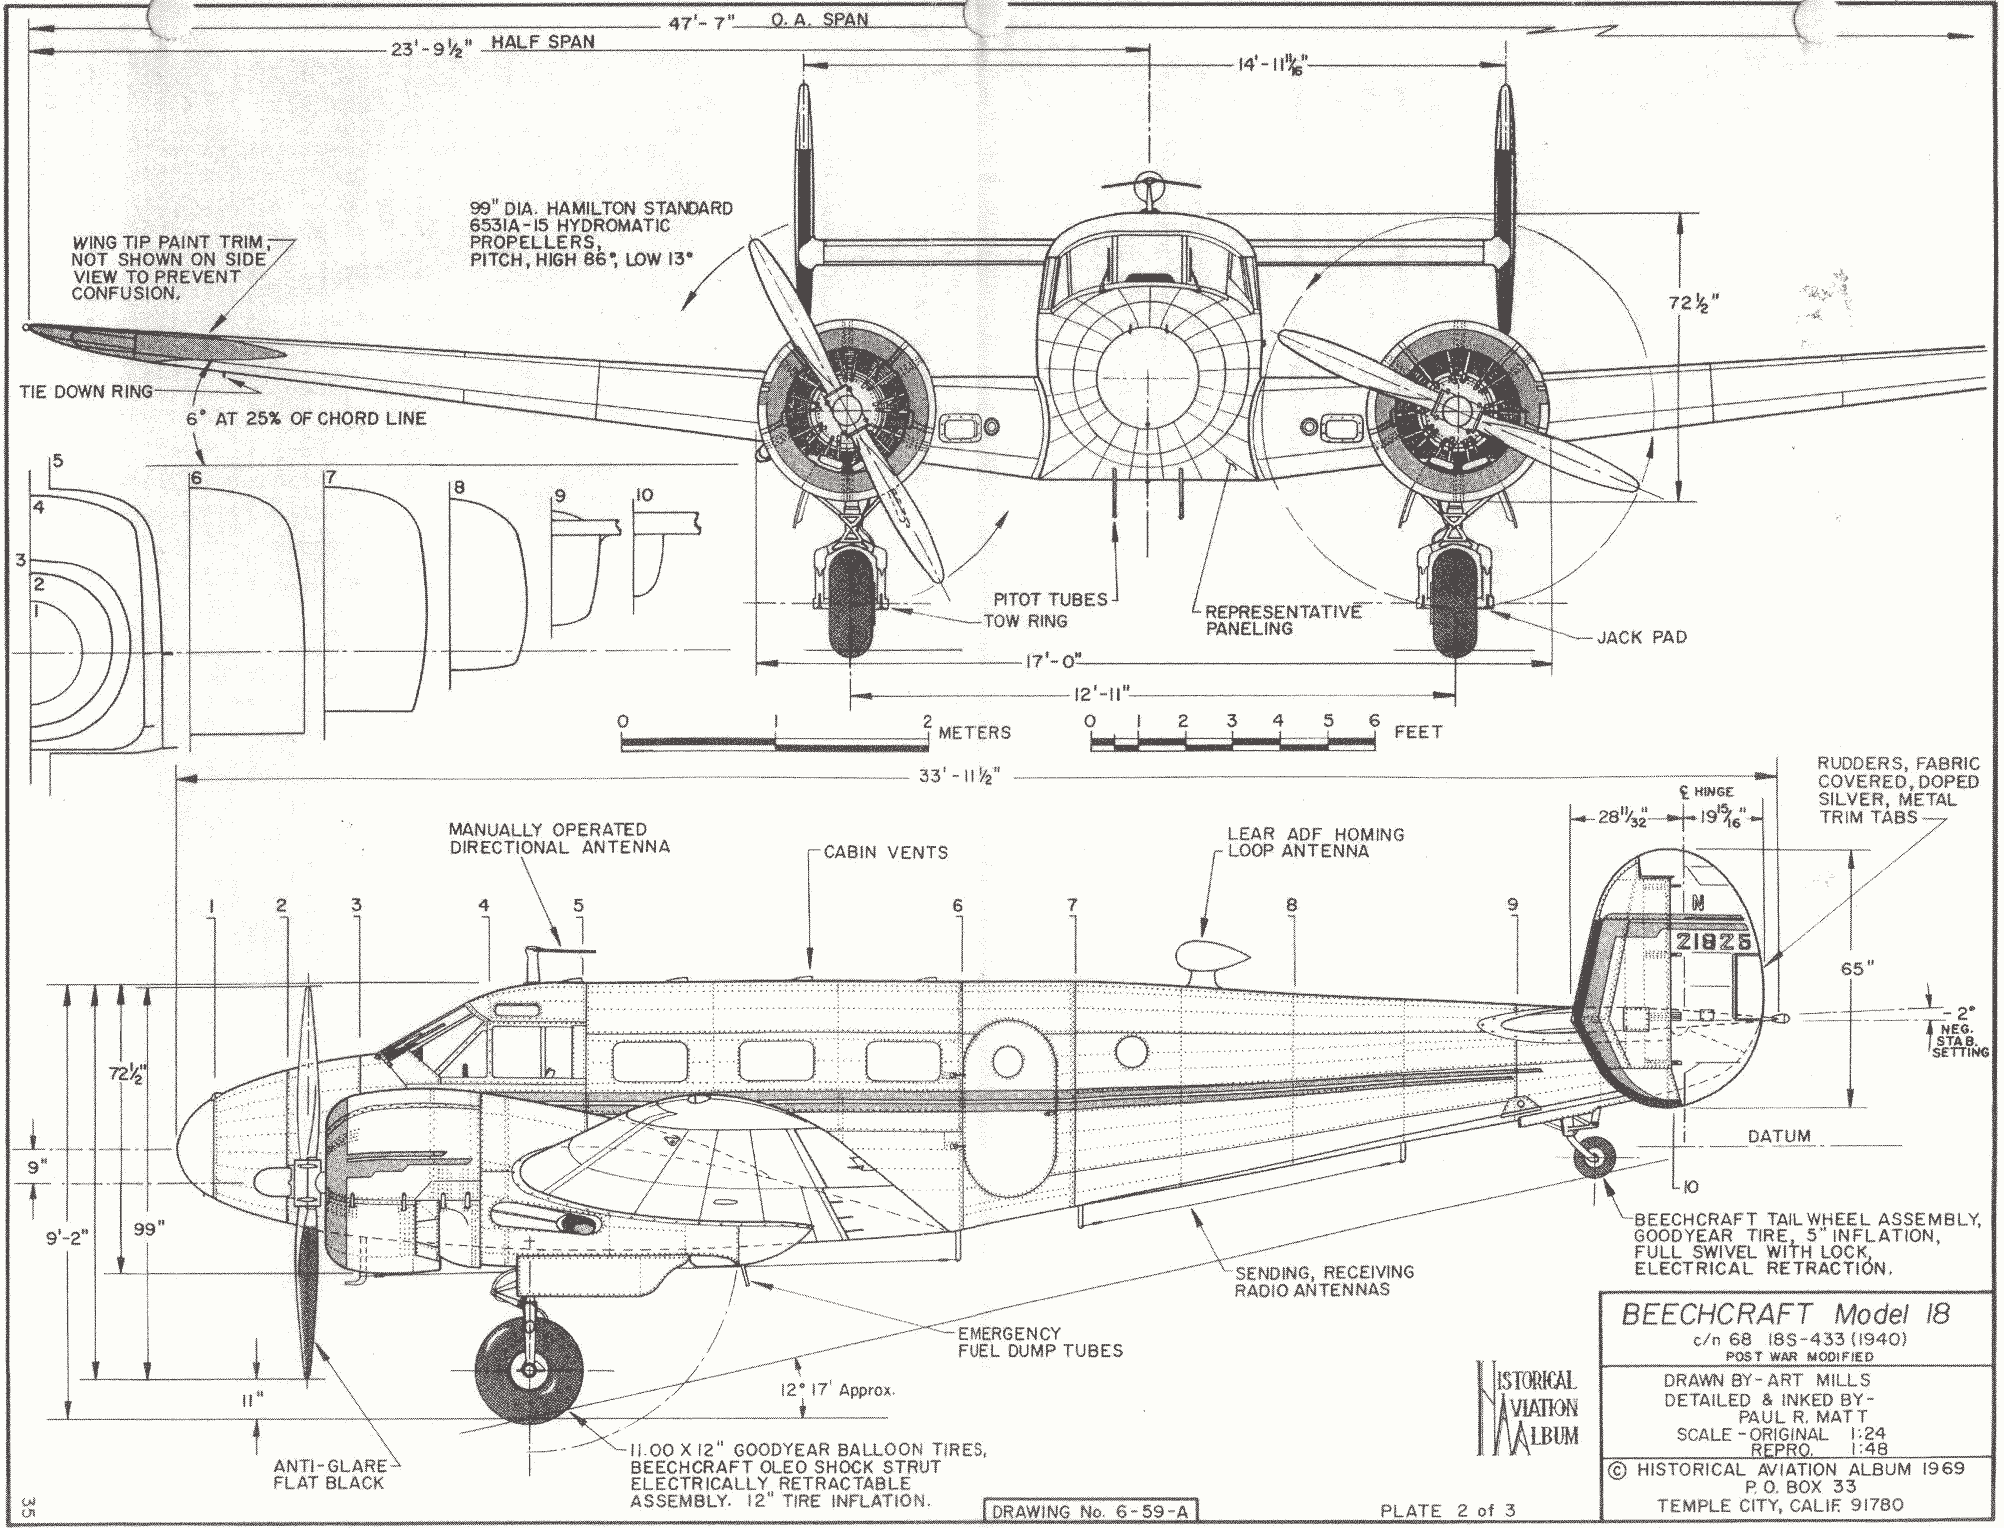 Beechcraft Model 18 blueprint